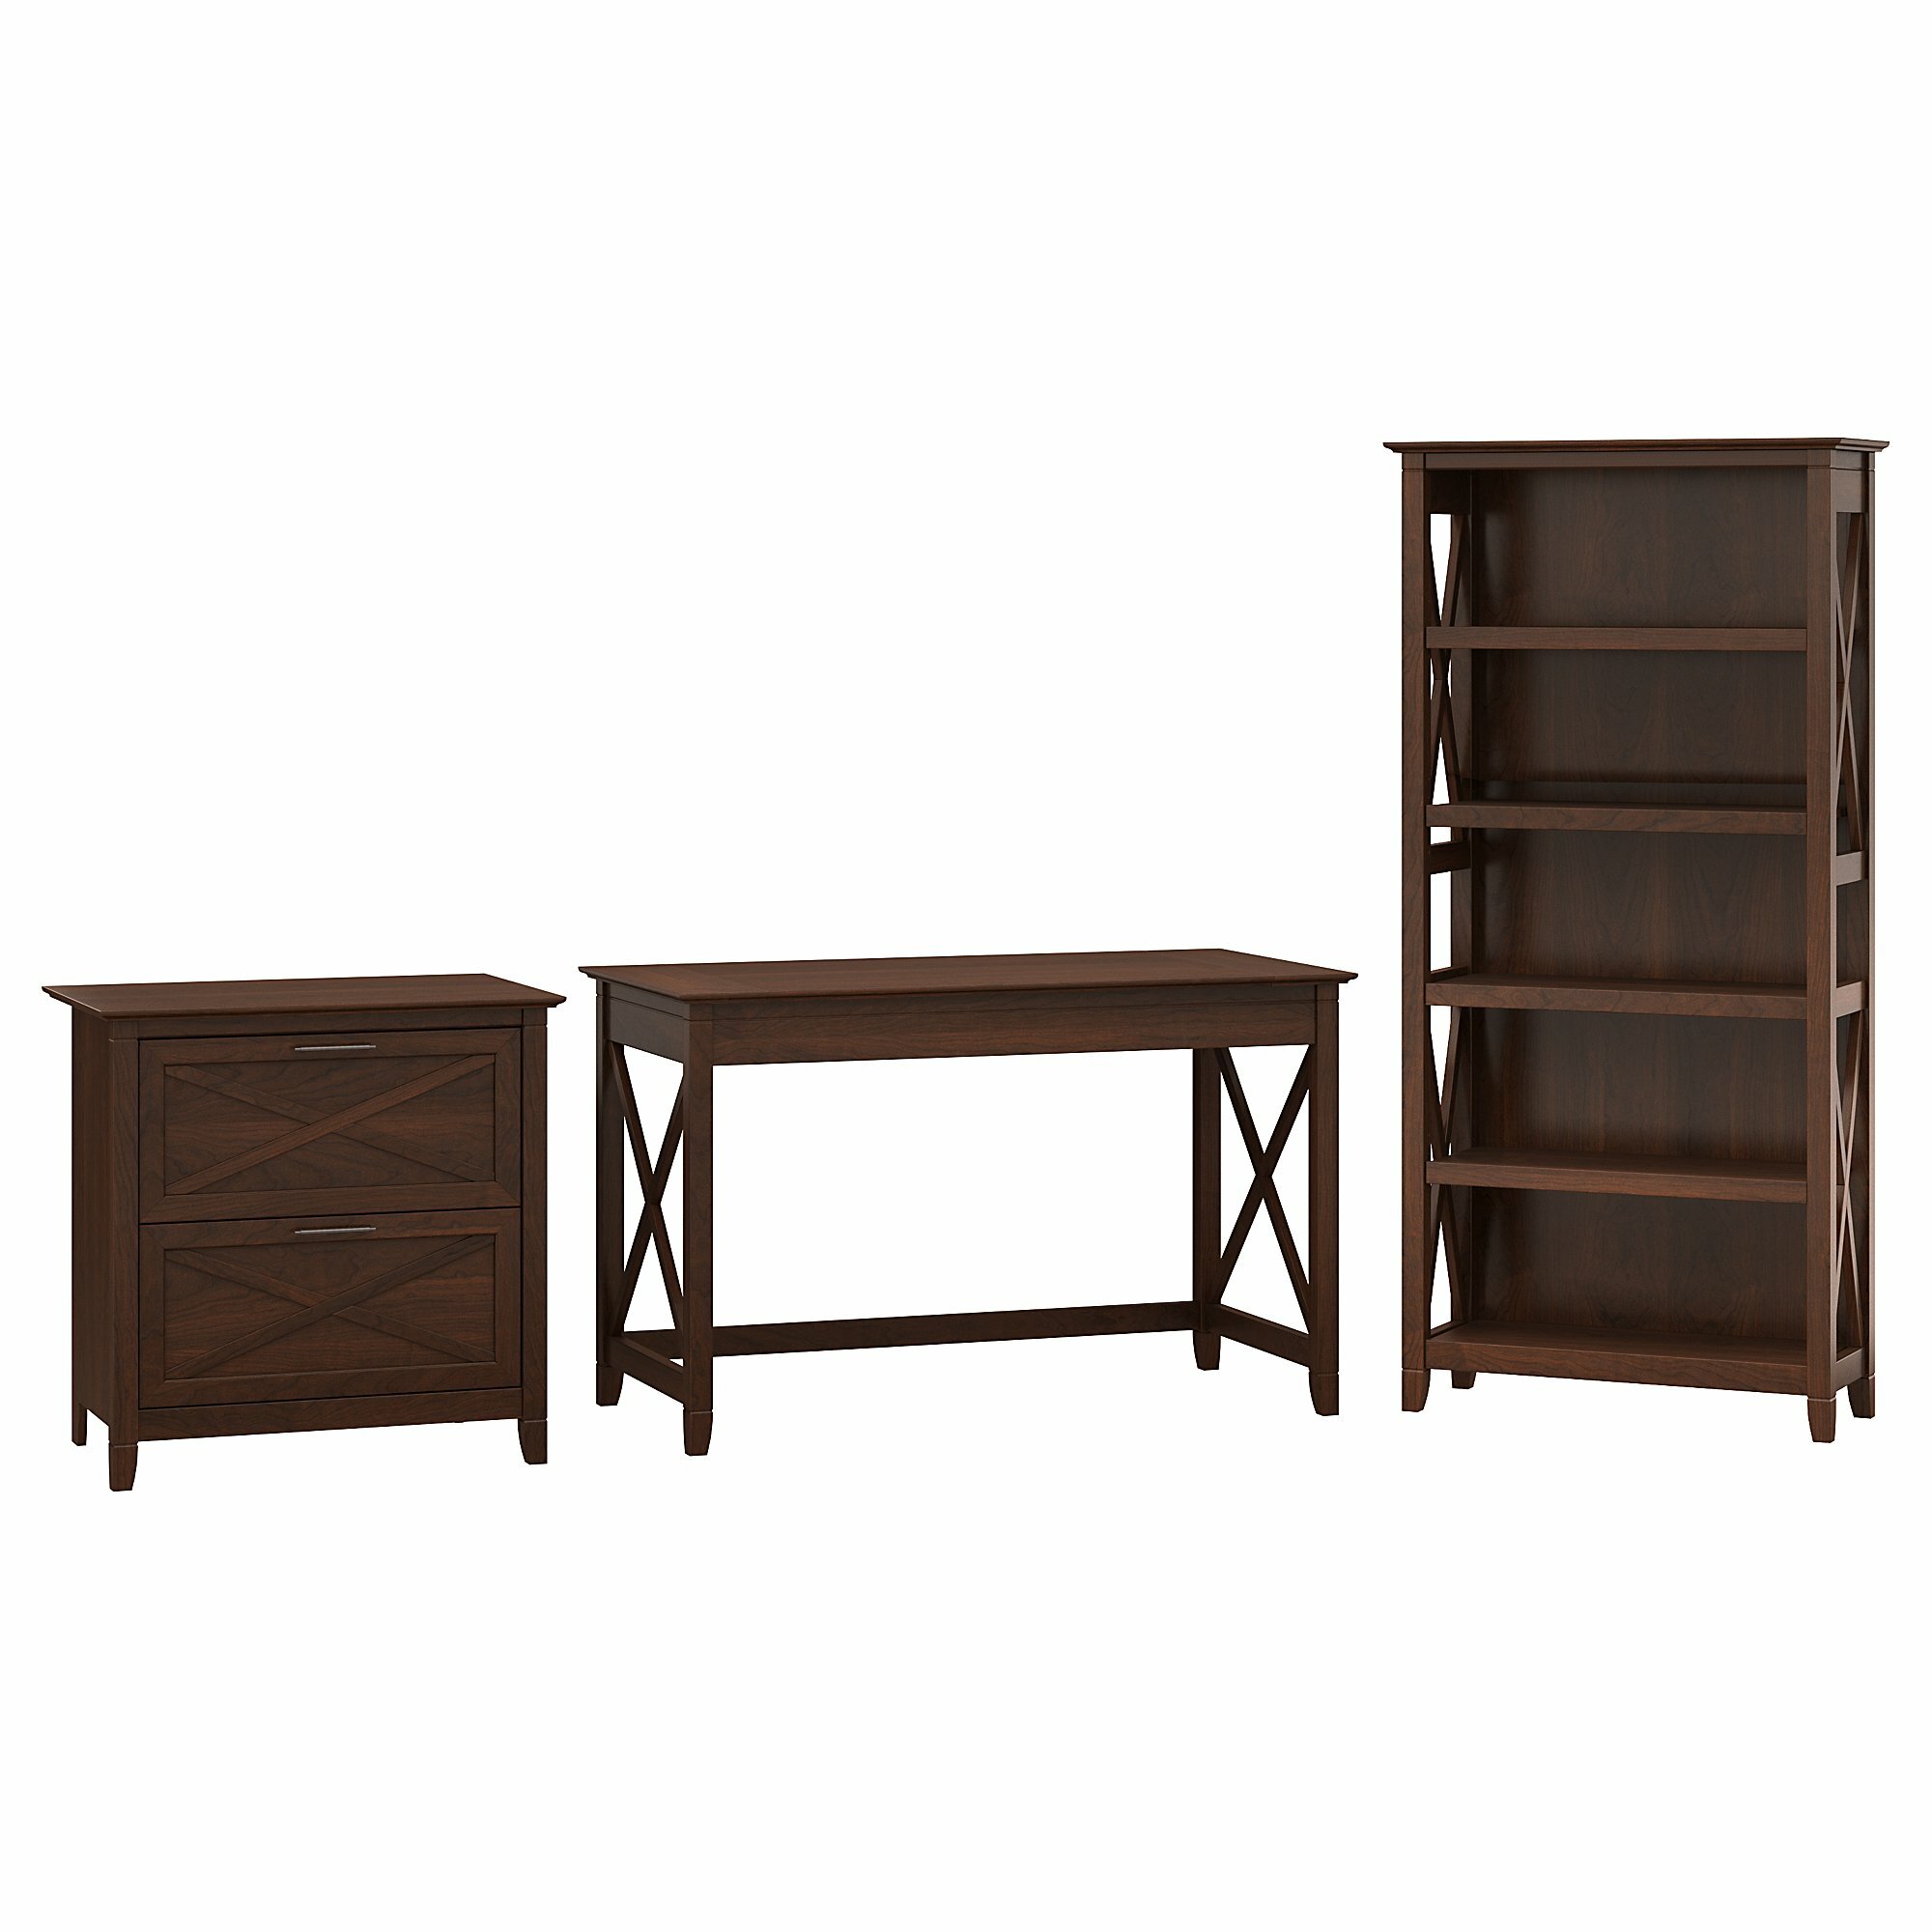 Ellmore Desk Bookcase And Filing Cabinet Set Reviews Joss Main